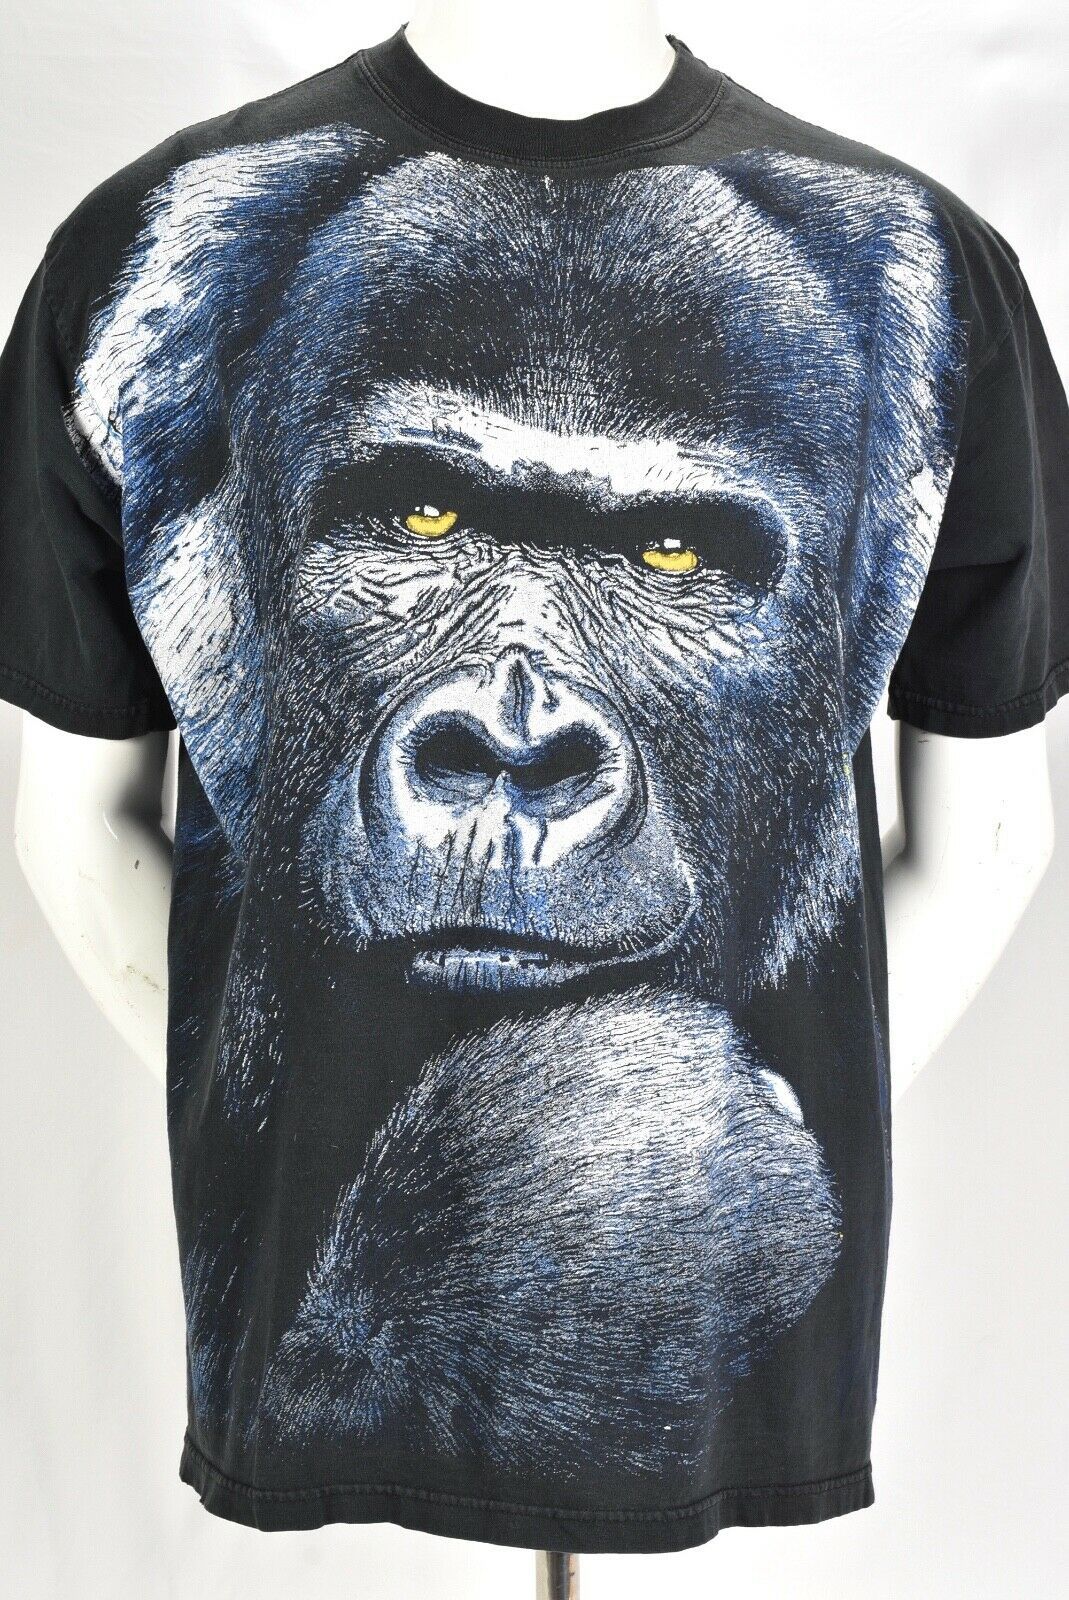 Primary image for Vintage 90s Gorilla big graphic T Shirt mens XL Animal Tee black